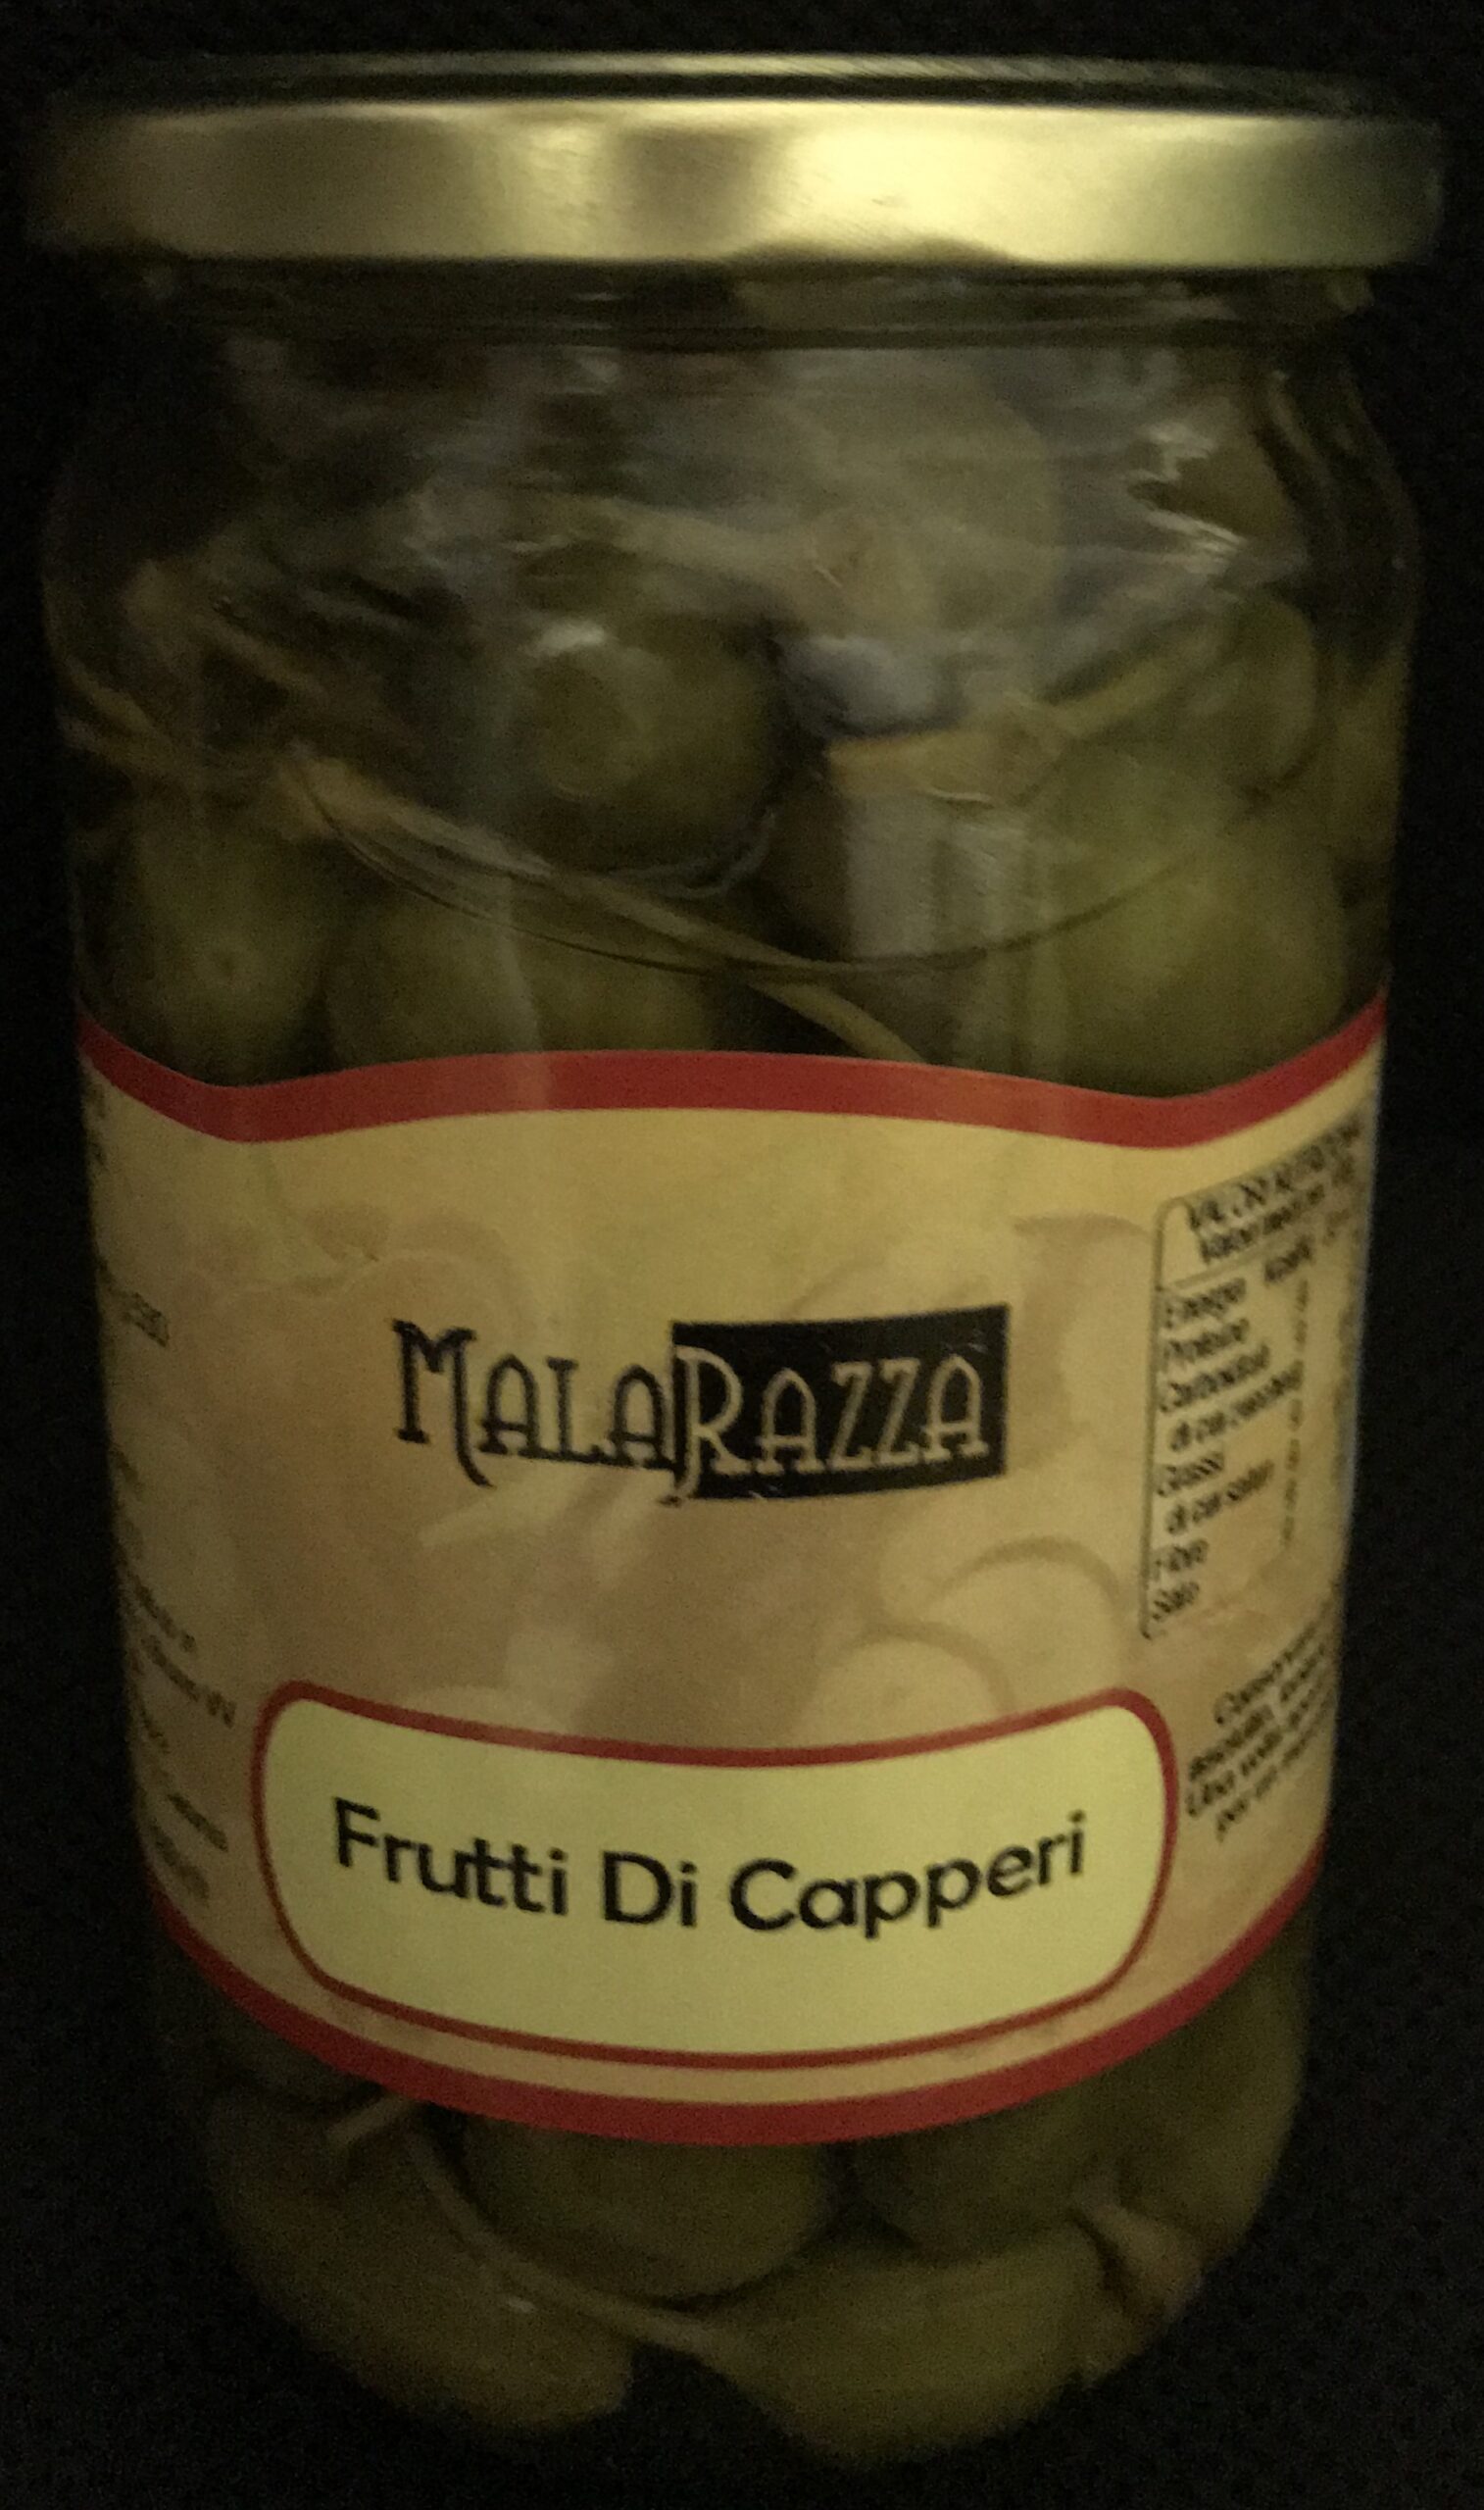 malarazza food made in italy cucunci